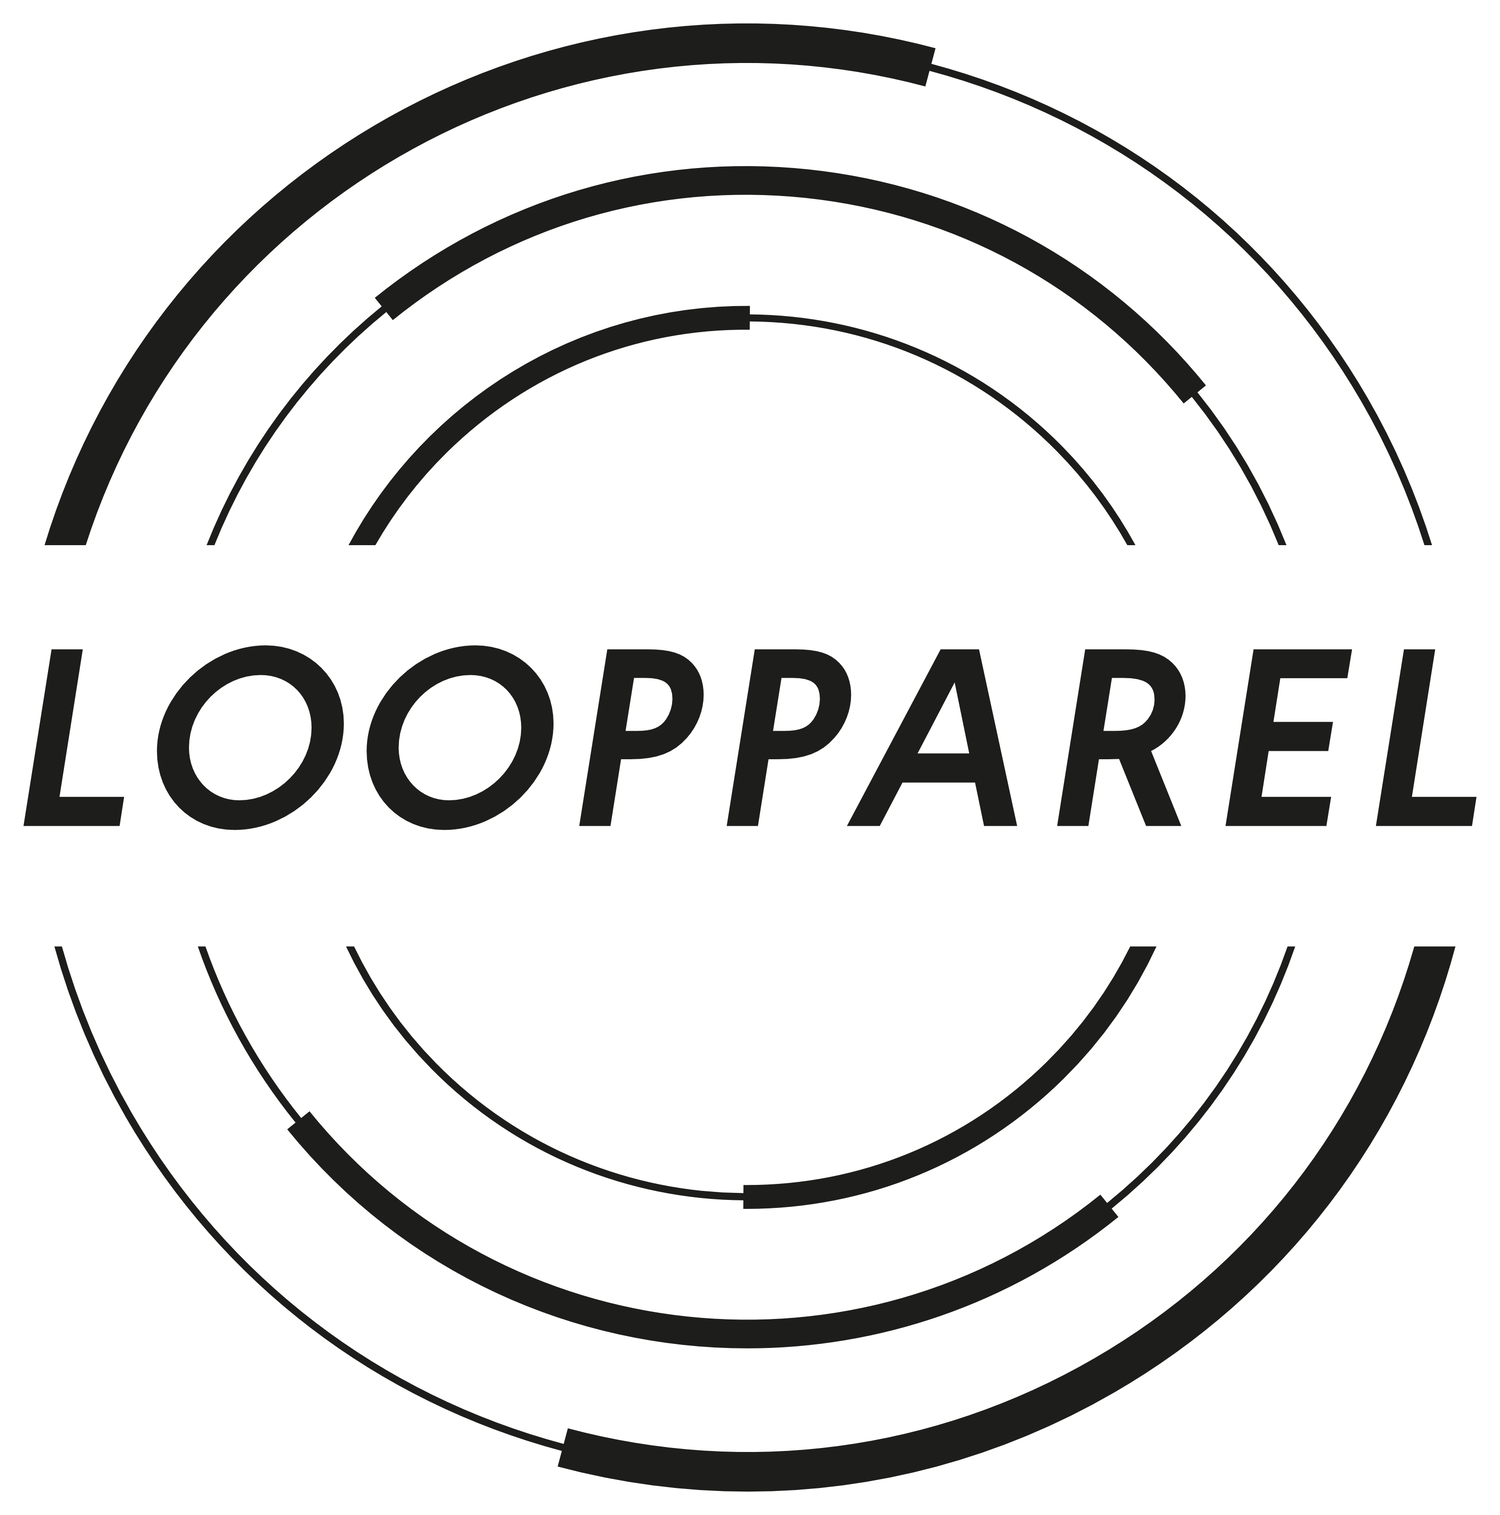 LOOPPAREL